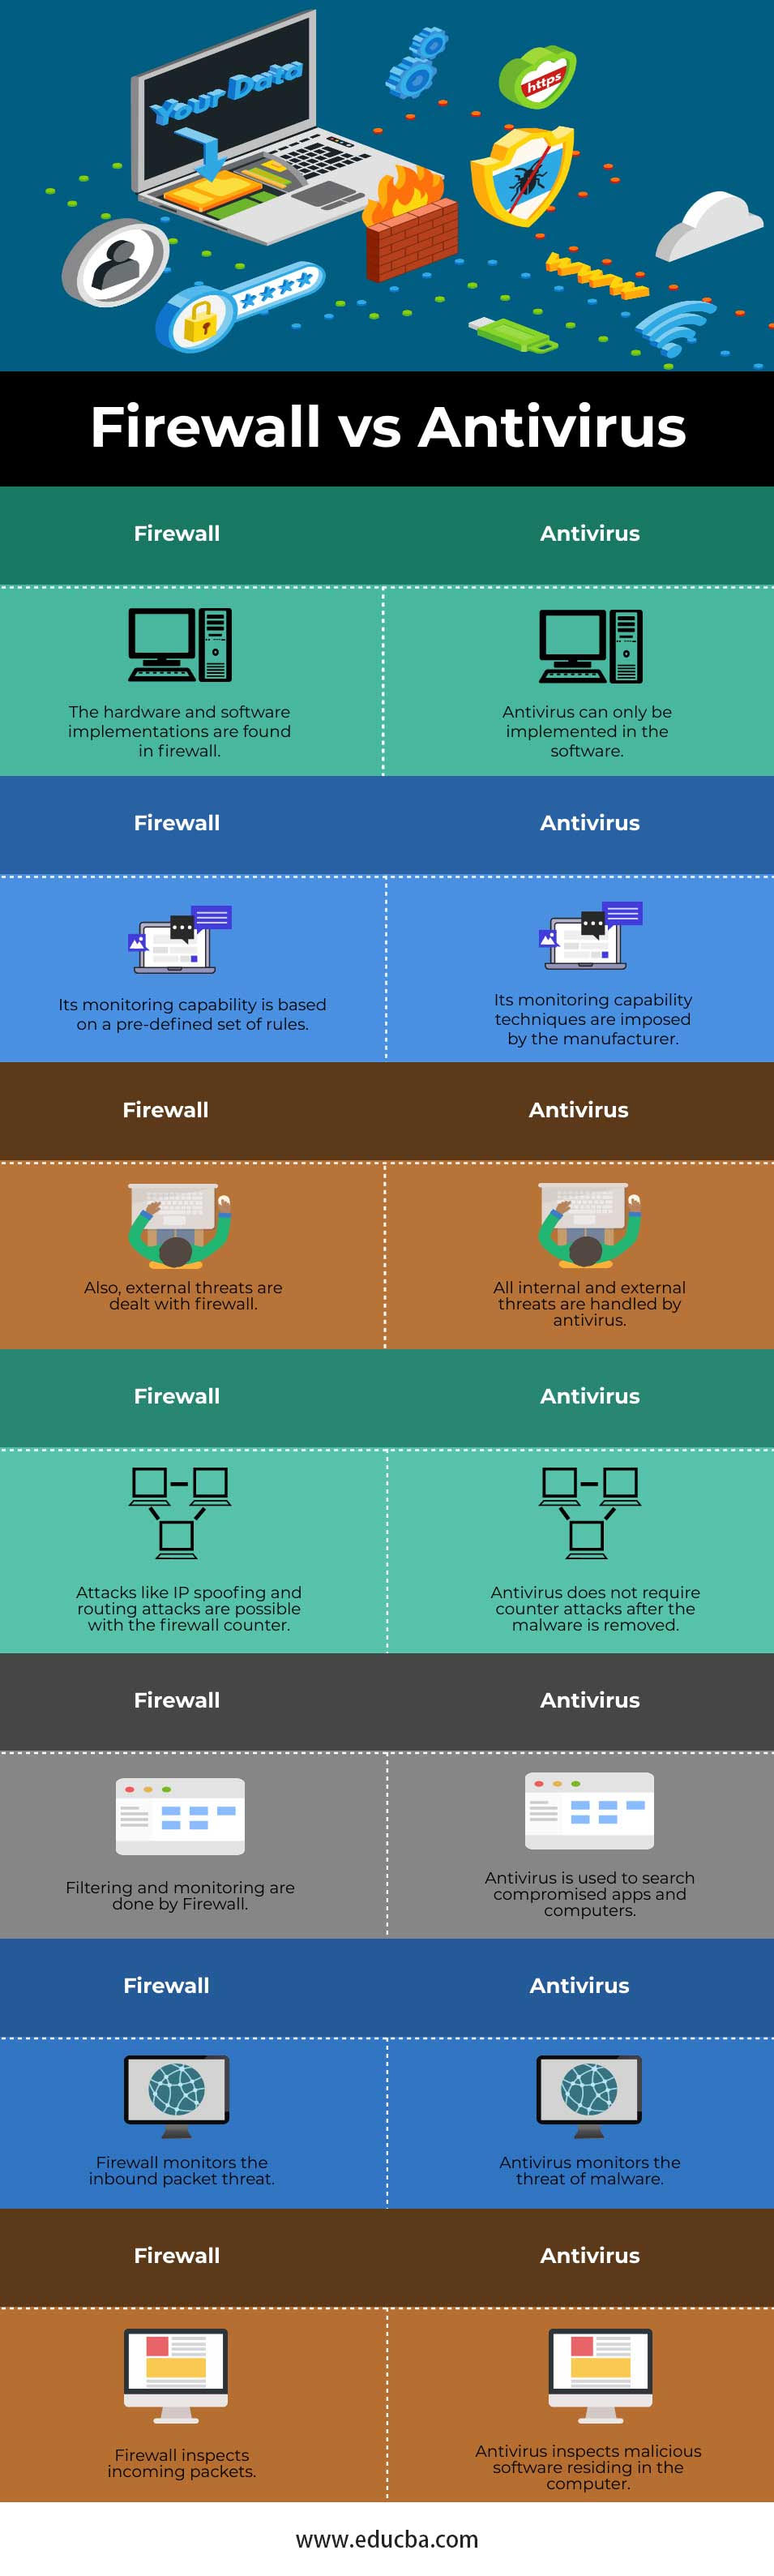 Firewall vs Antivirus Info